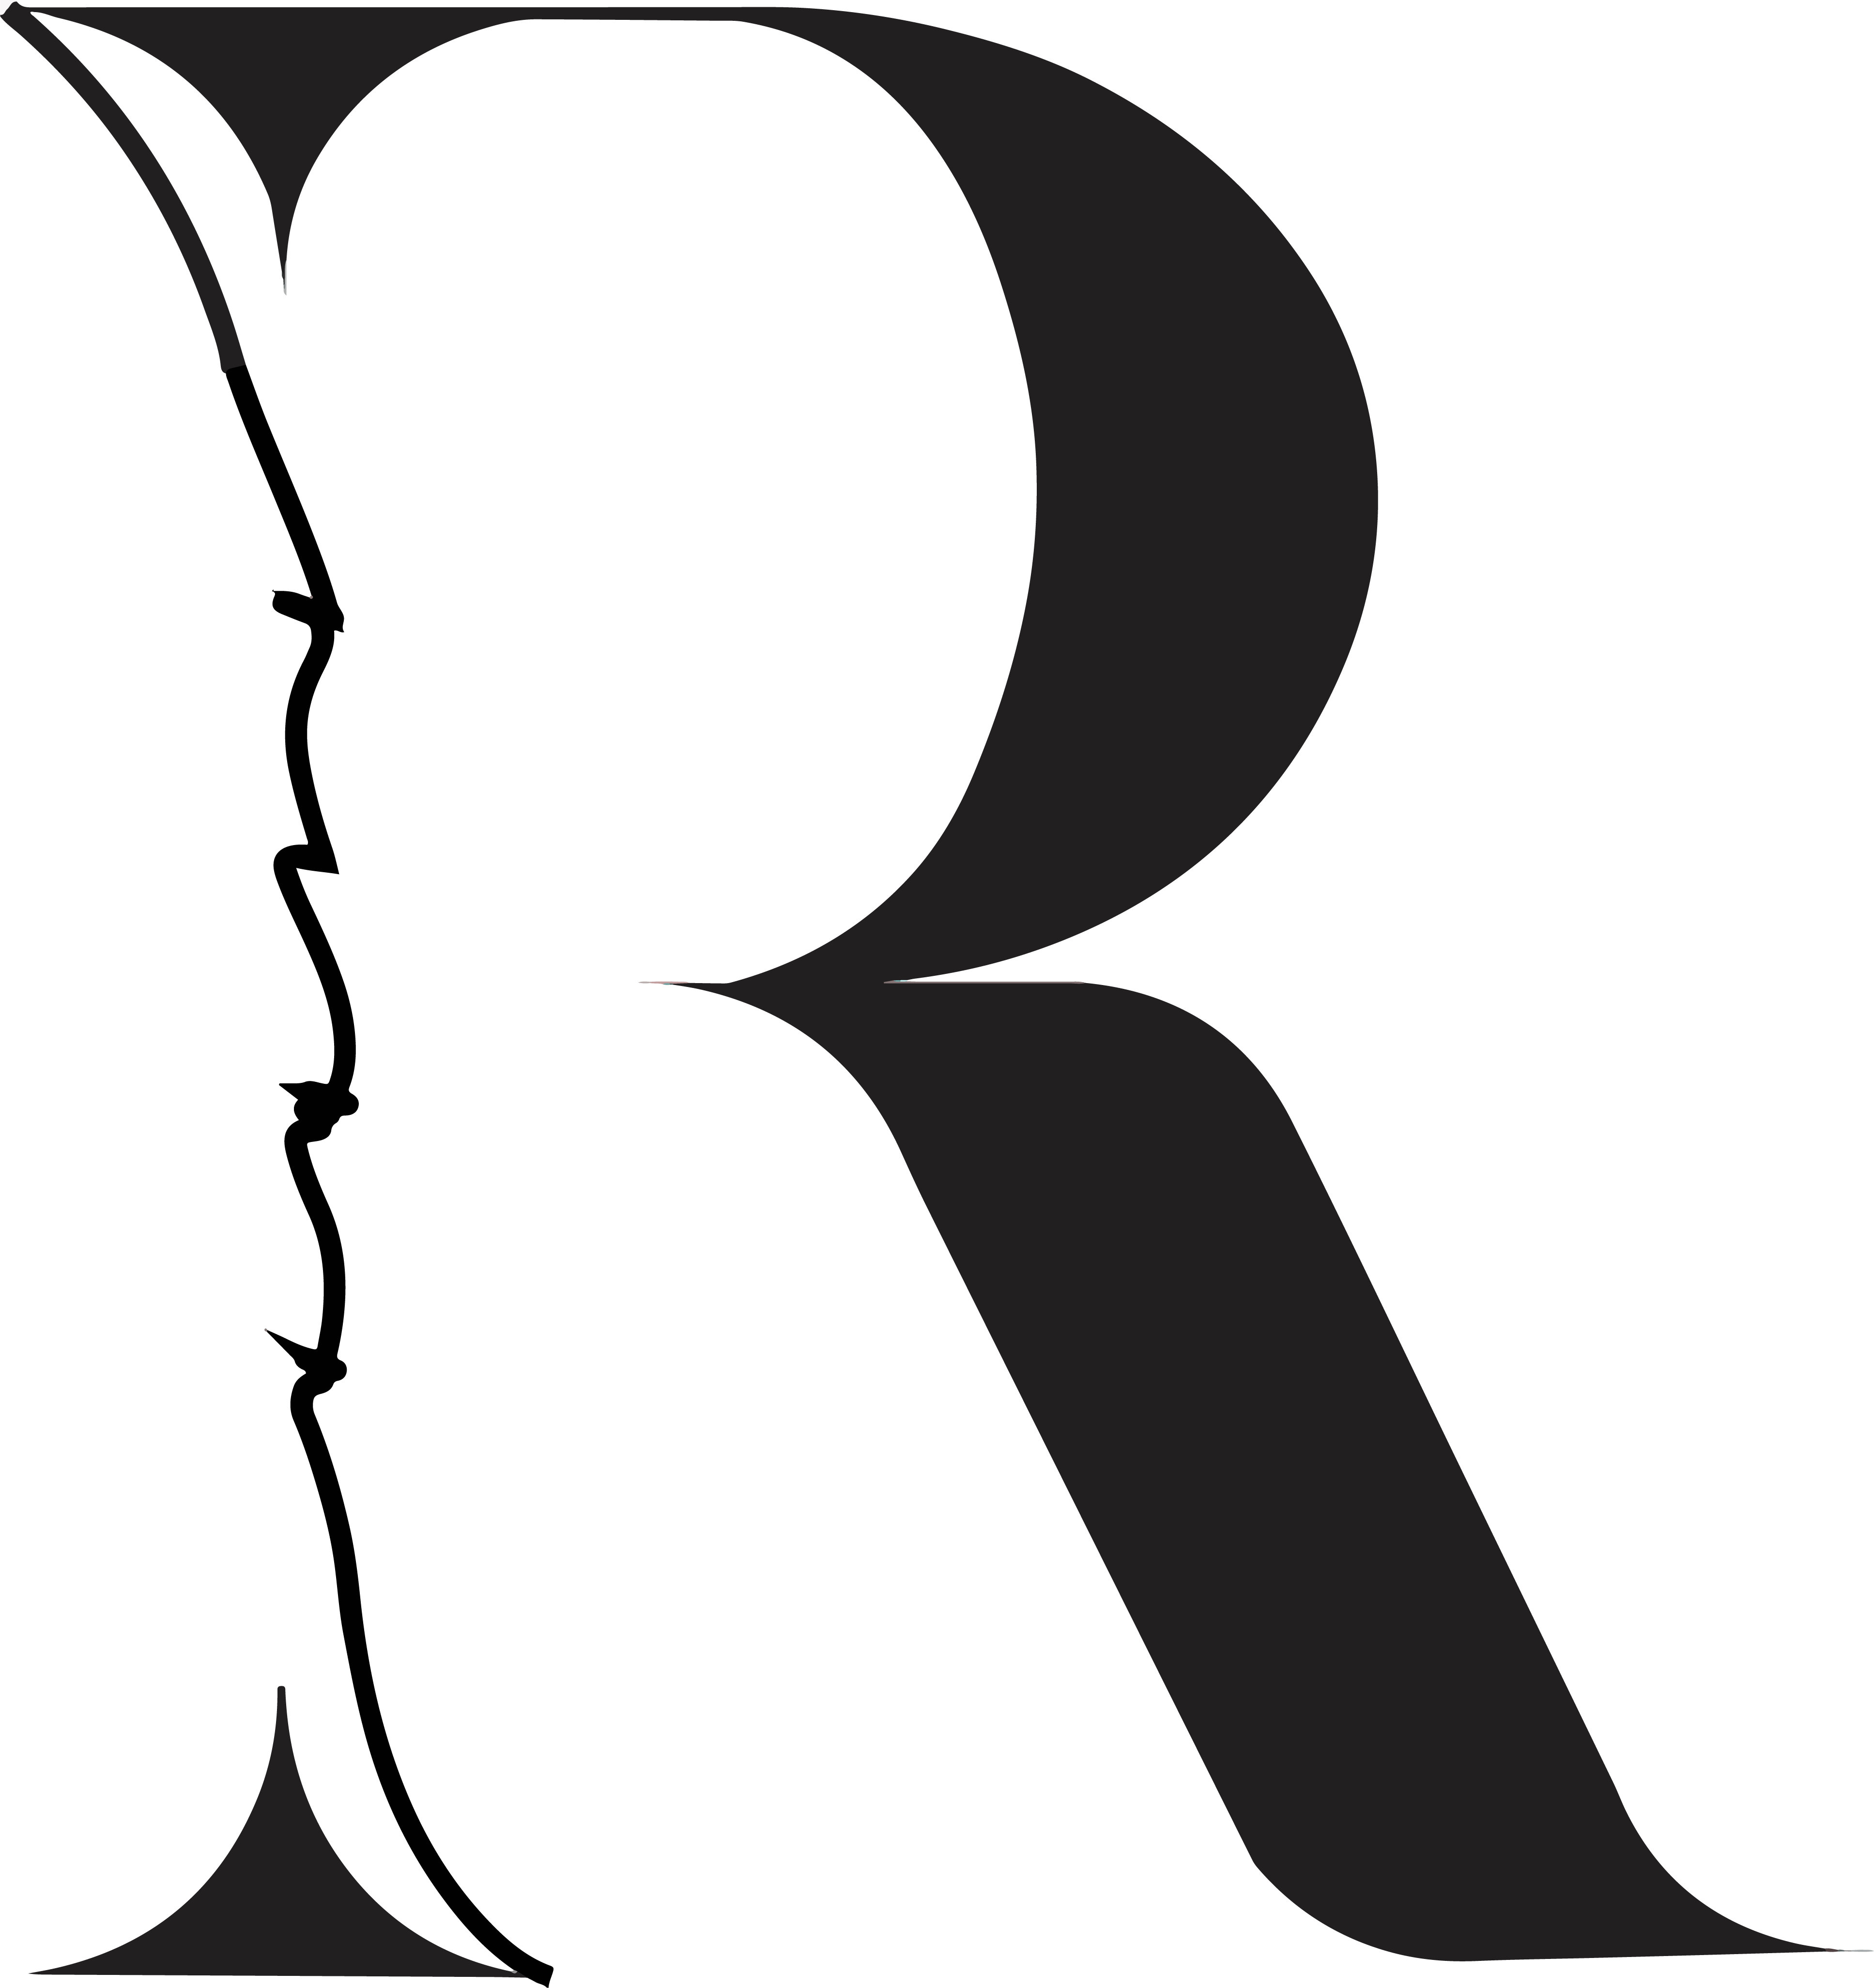 RIMN – Hong Kong-based label